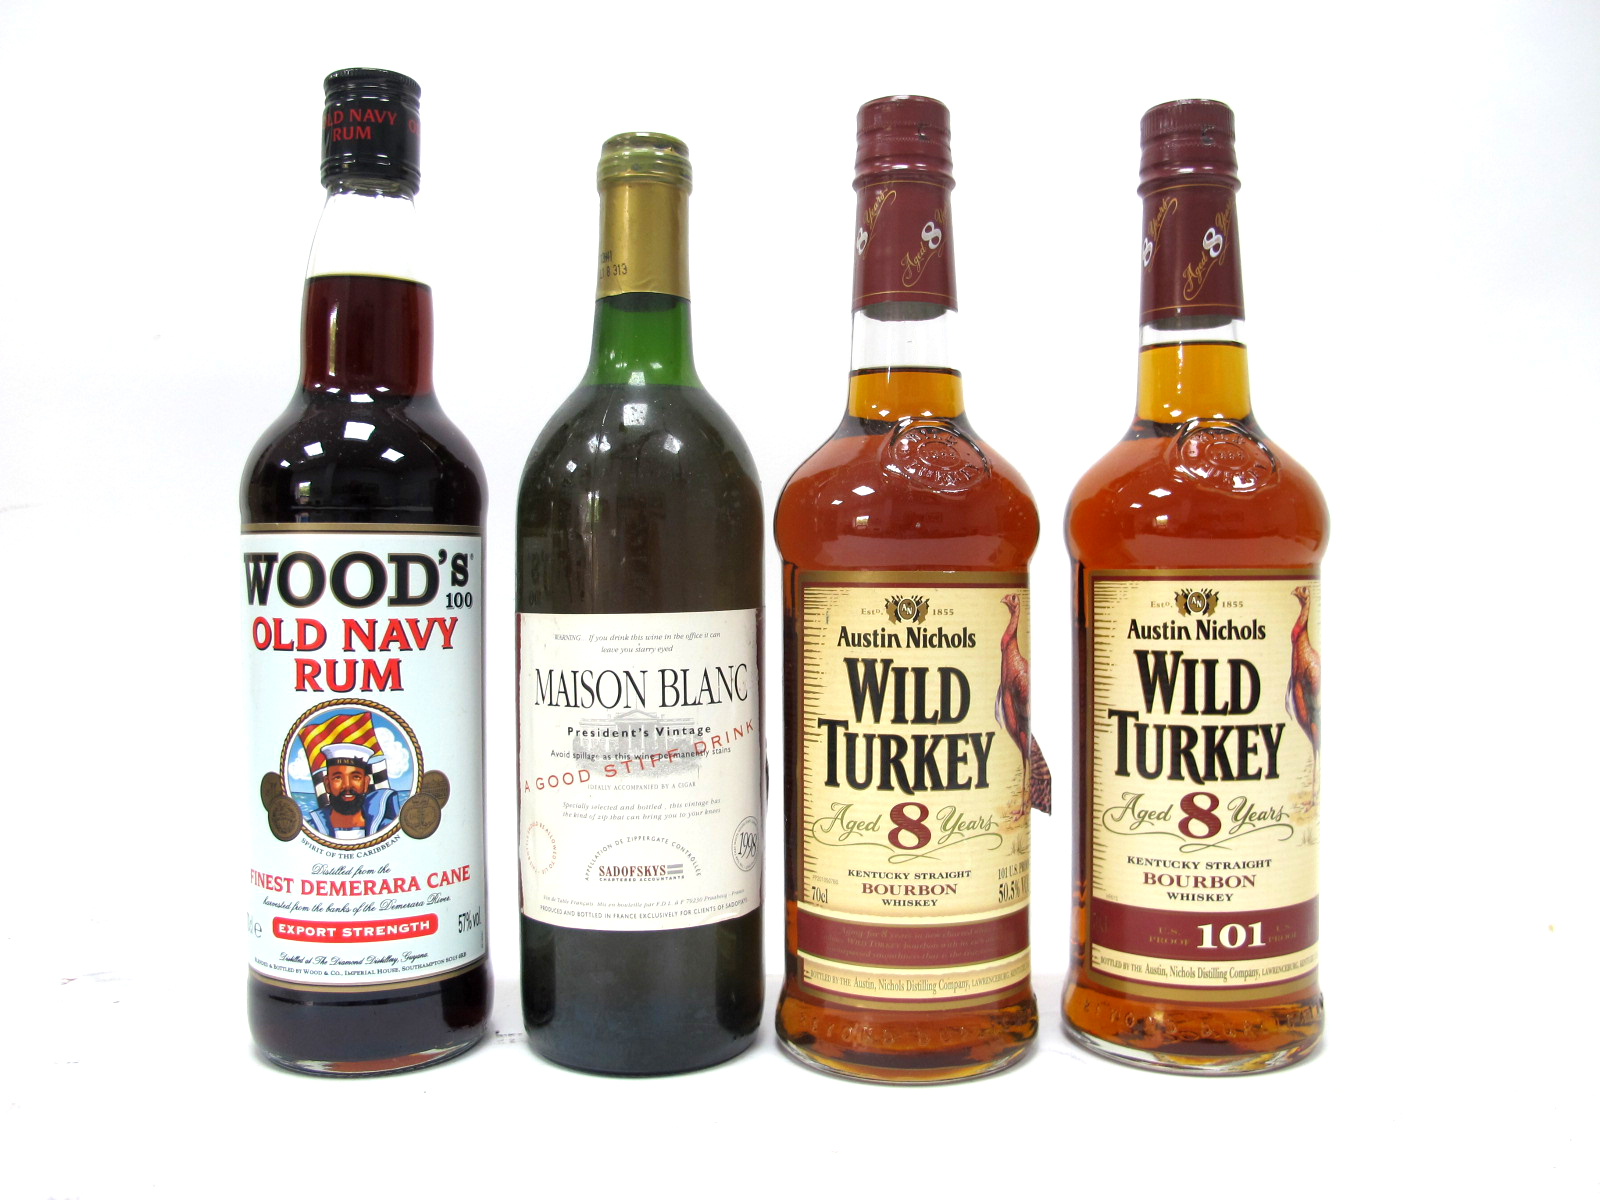 Bourbon - Austin Nichols Wild Turkey Bourbon Whiskey Aged 8 Years, 70cl, 101 U.S. Proof, 50.5% Vol.,